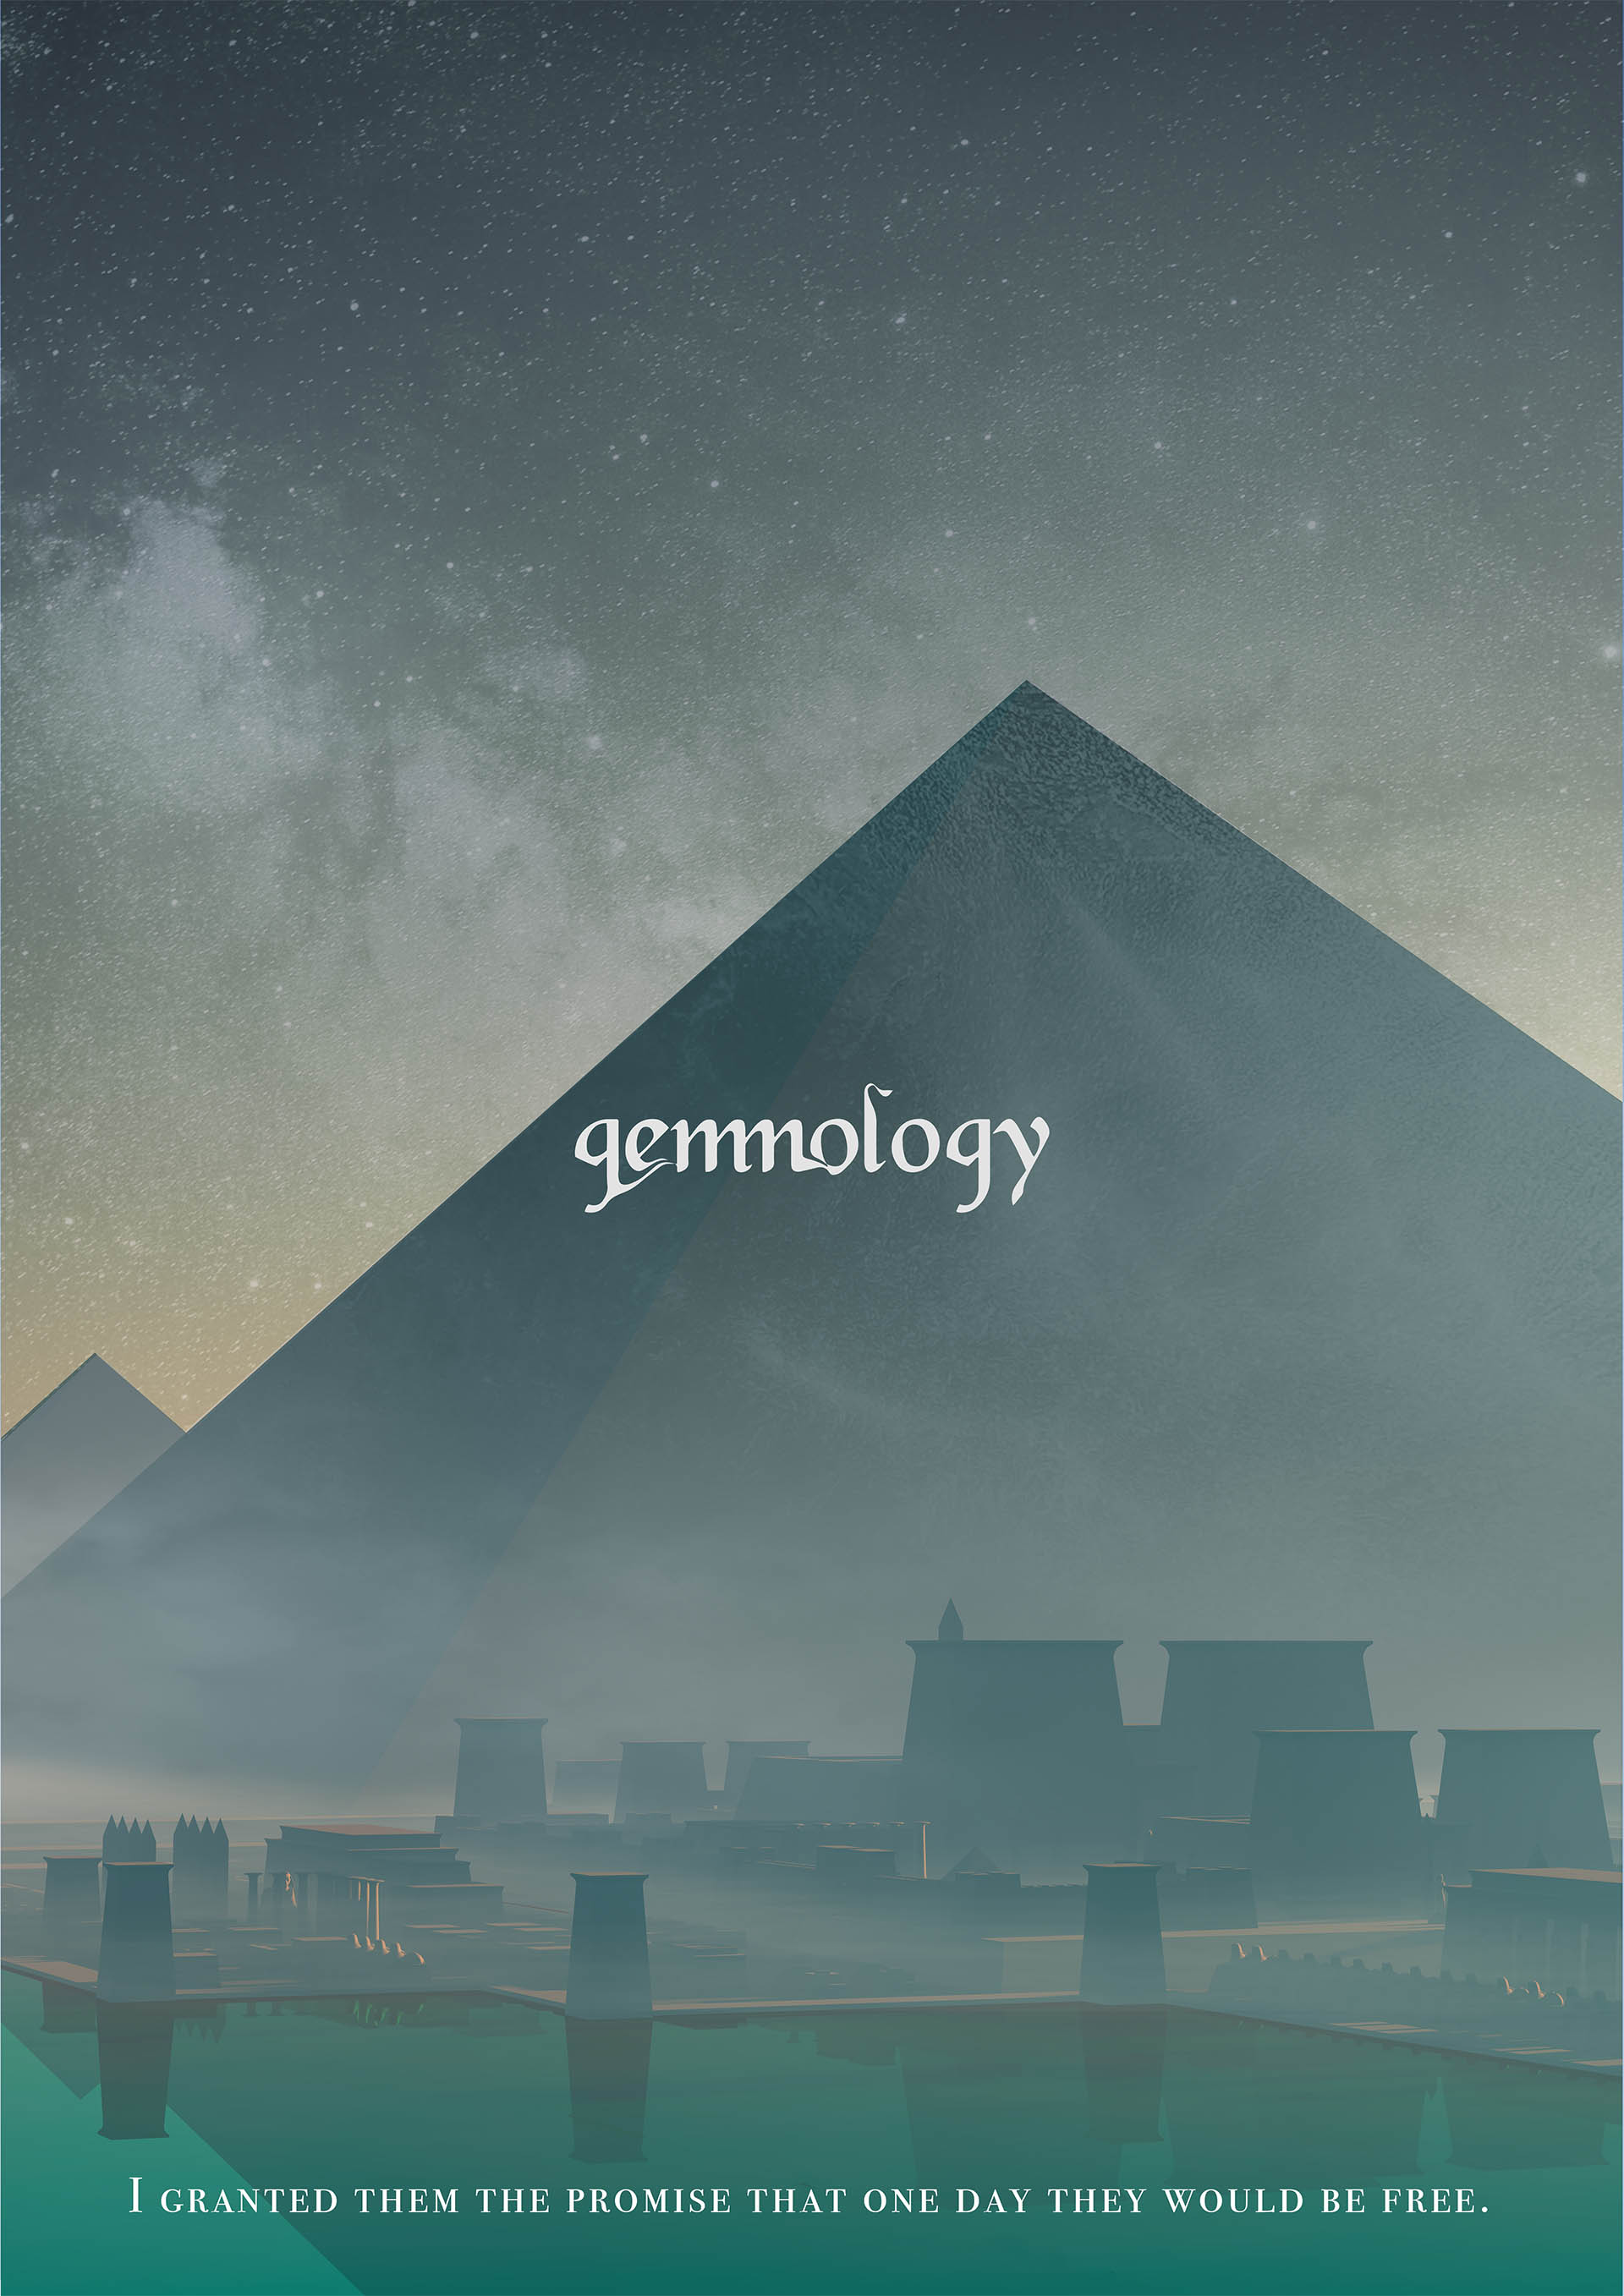 Gemmology promotional poster